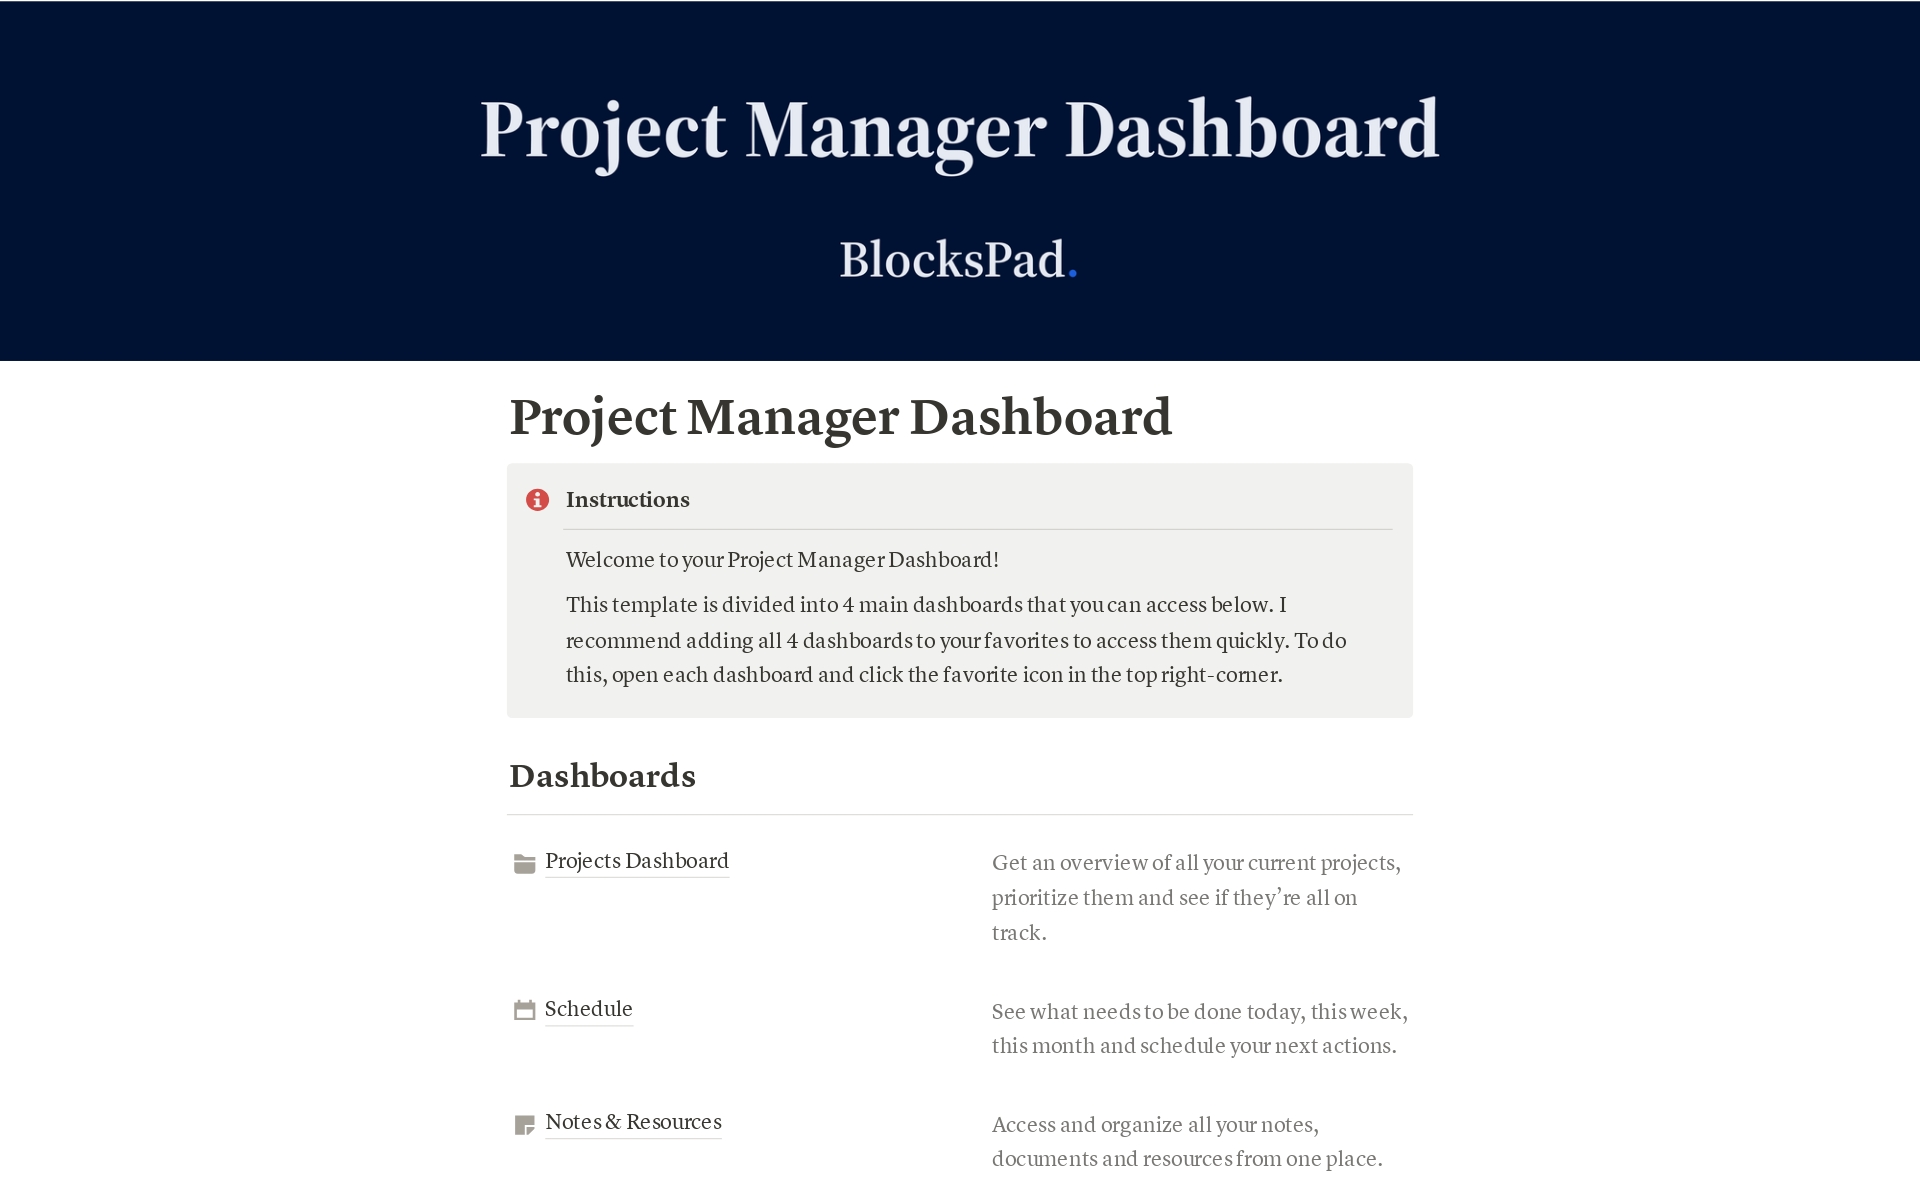 Vista previa de una plantilla para Project Manager Dashboard